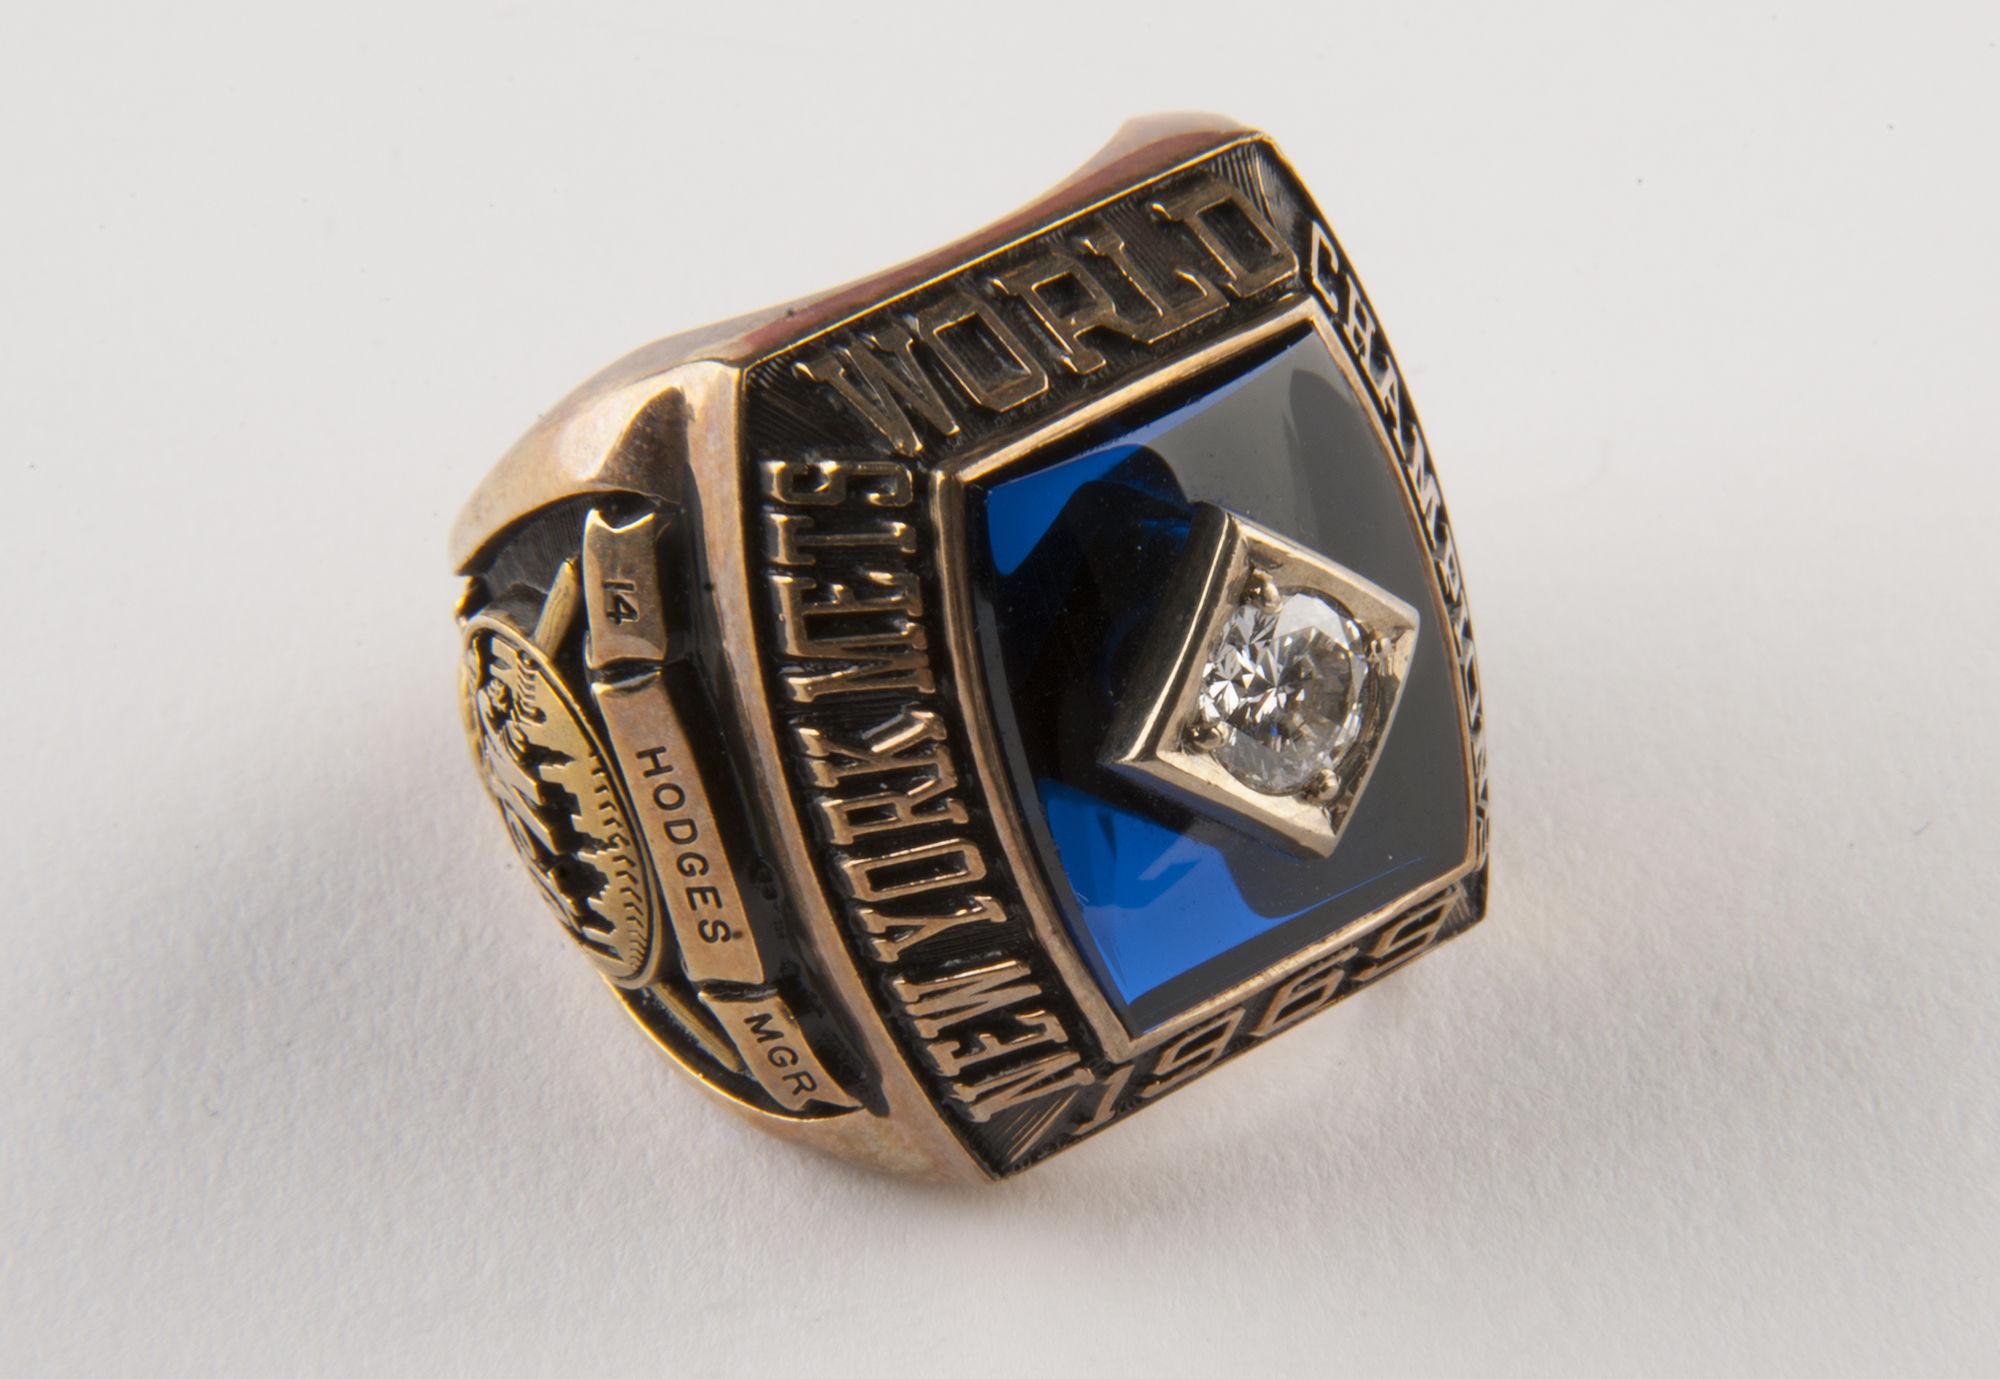 Rings tell story of baseball's greatest teams